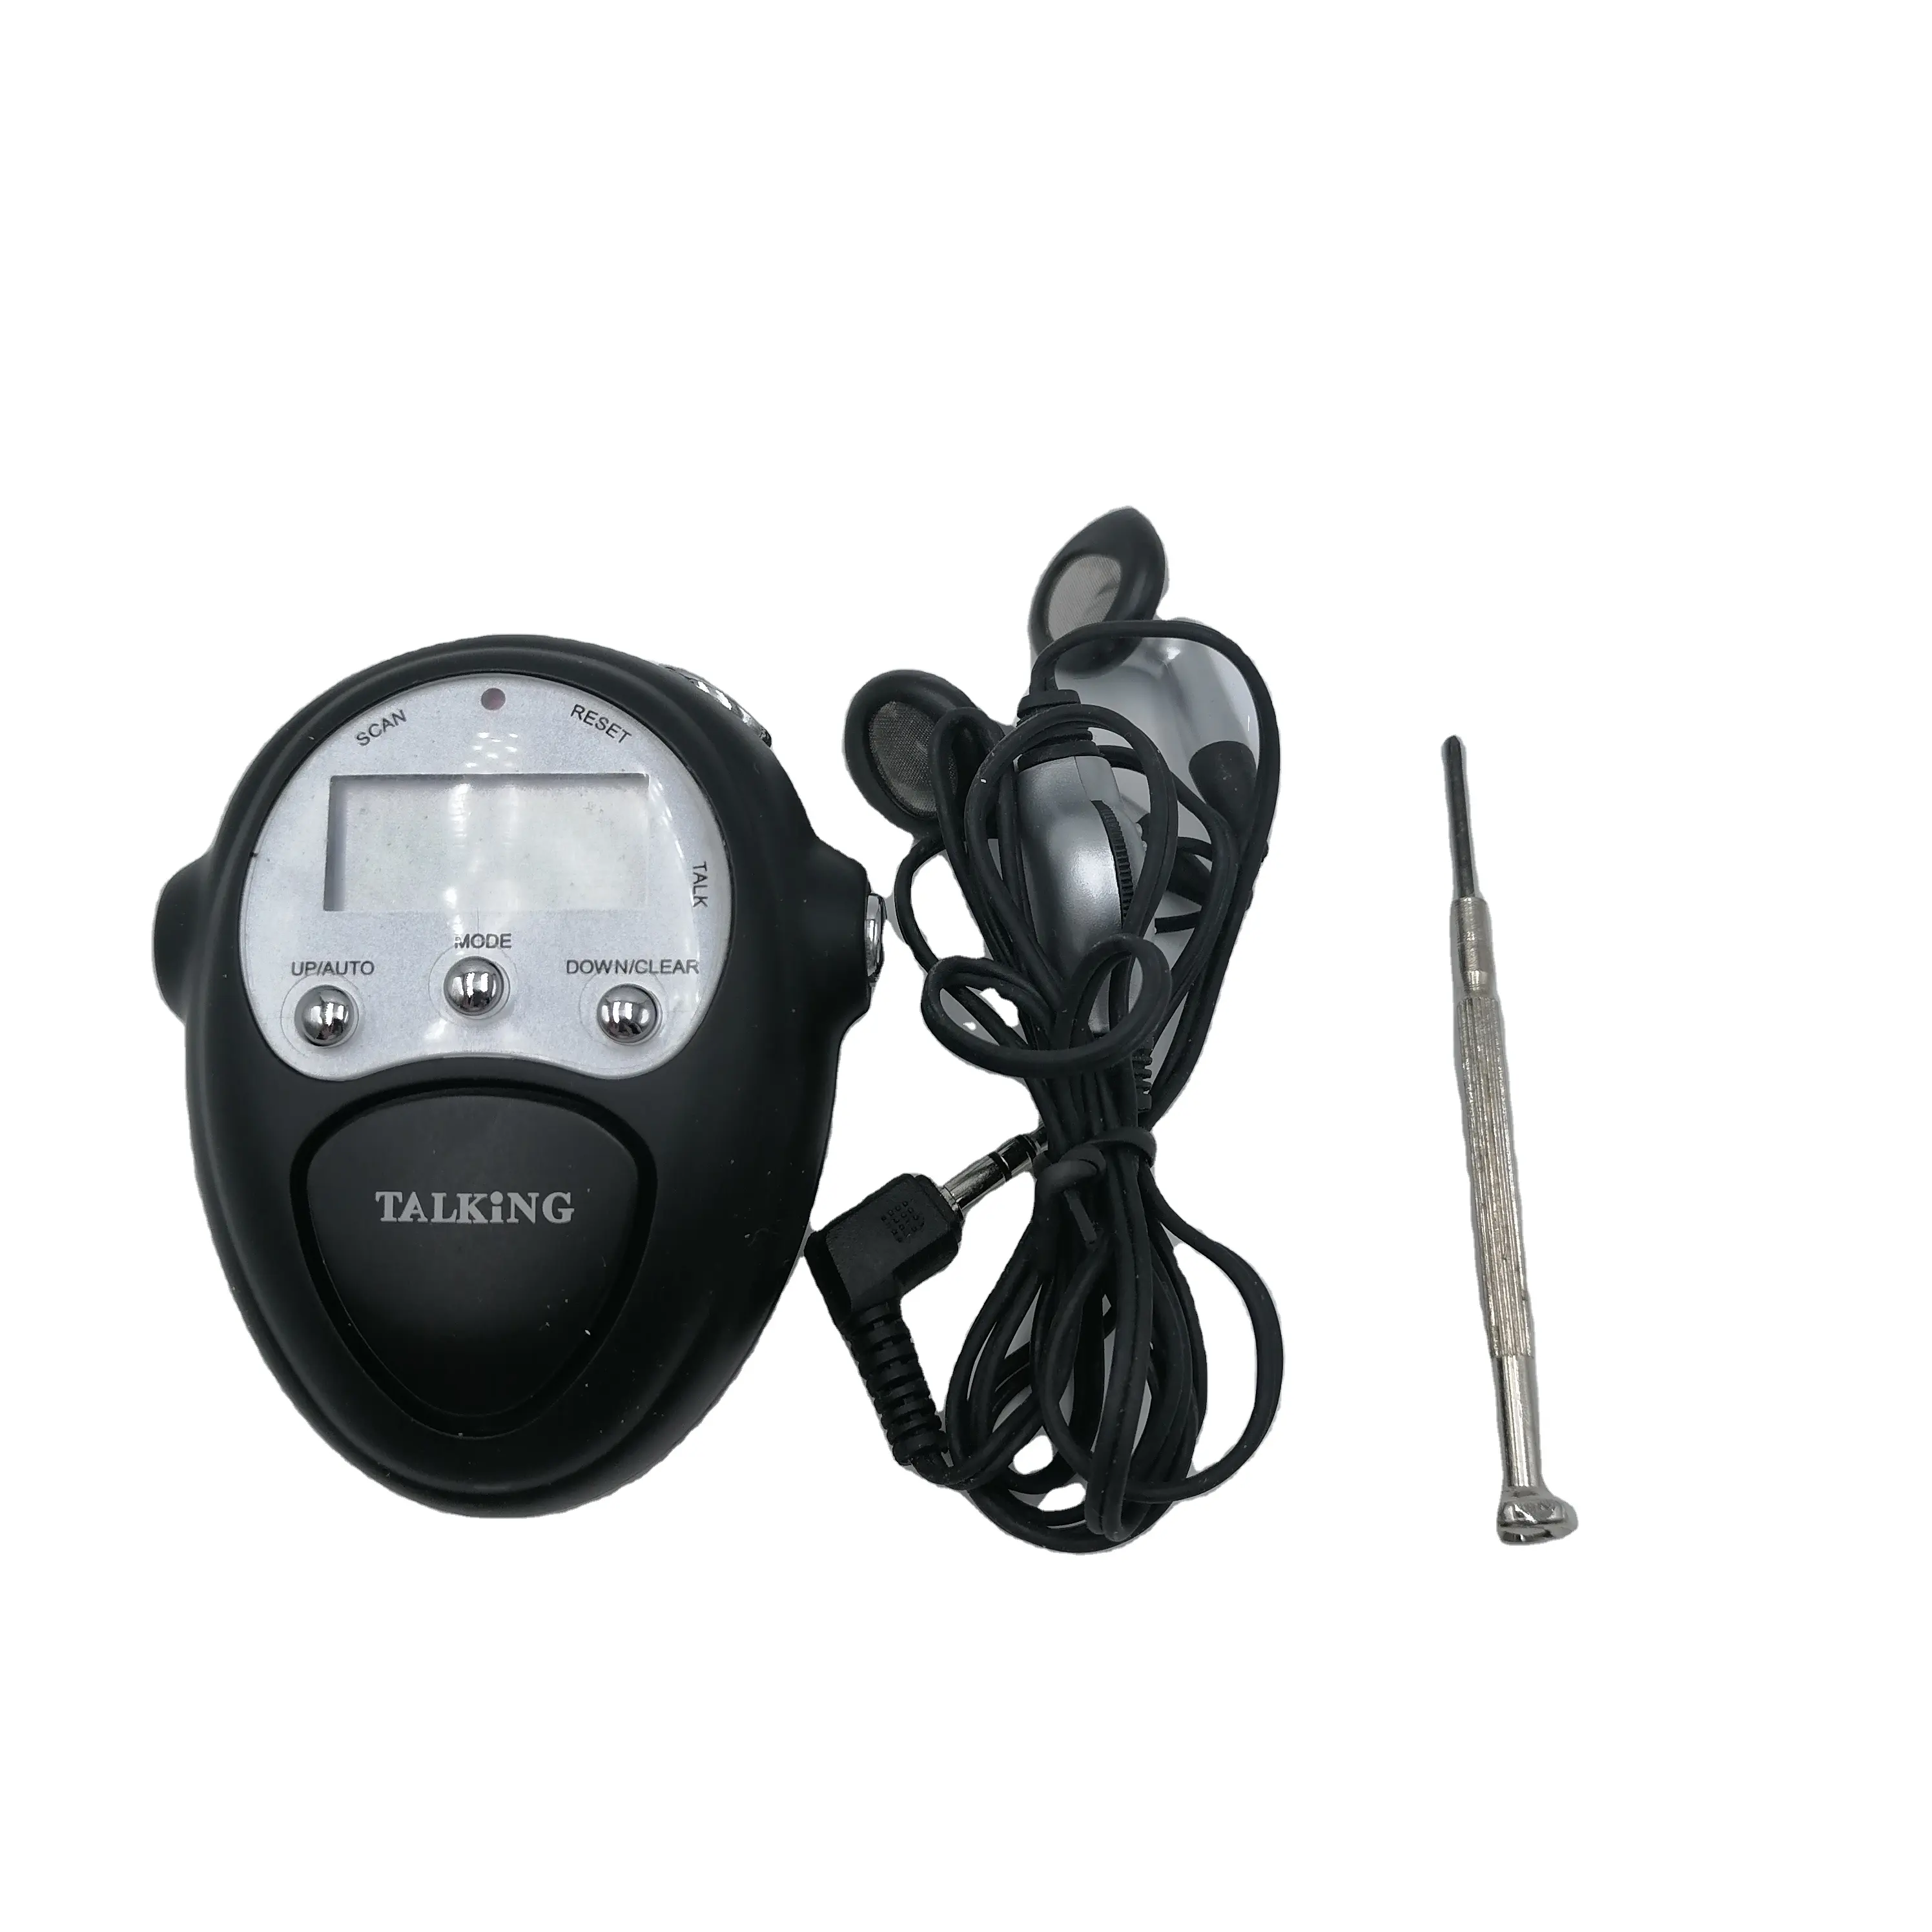 Podómetro de radio para caminar con clip y Correa, contador de pasos preciso, distancia a pie millas/km, contador de calorías